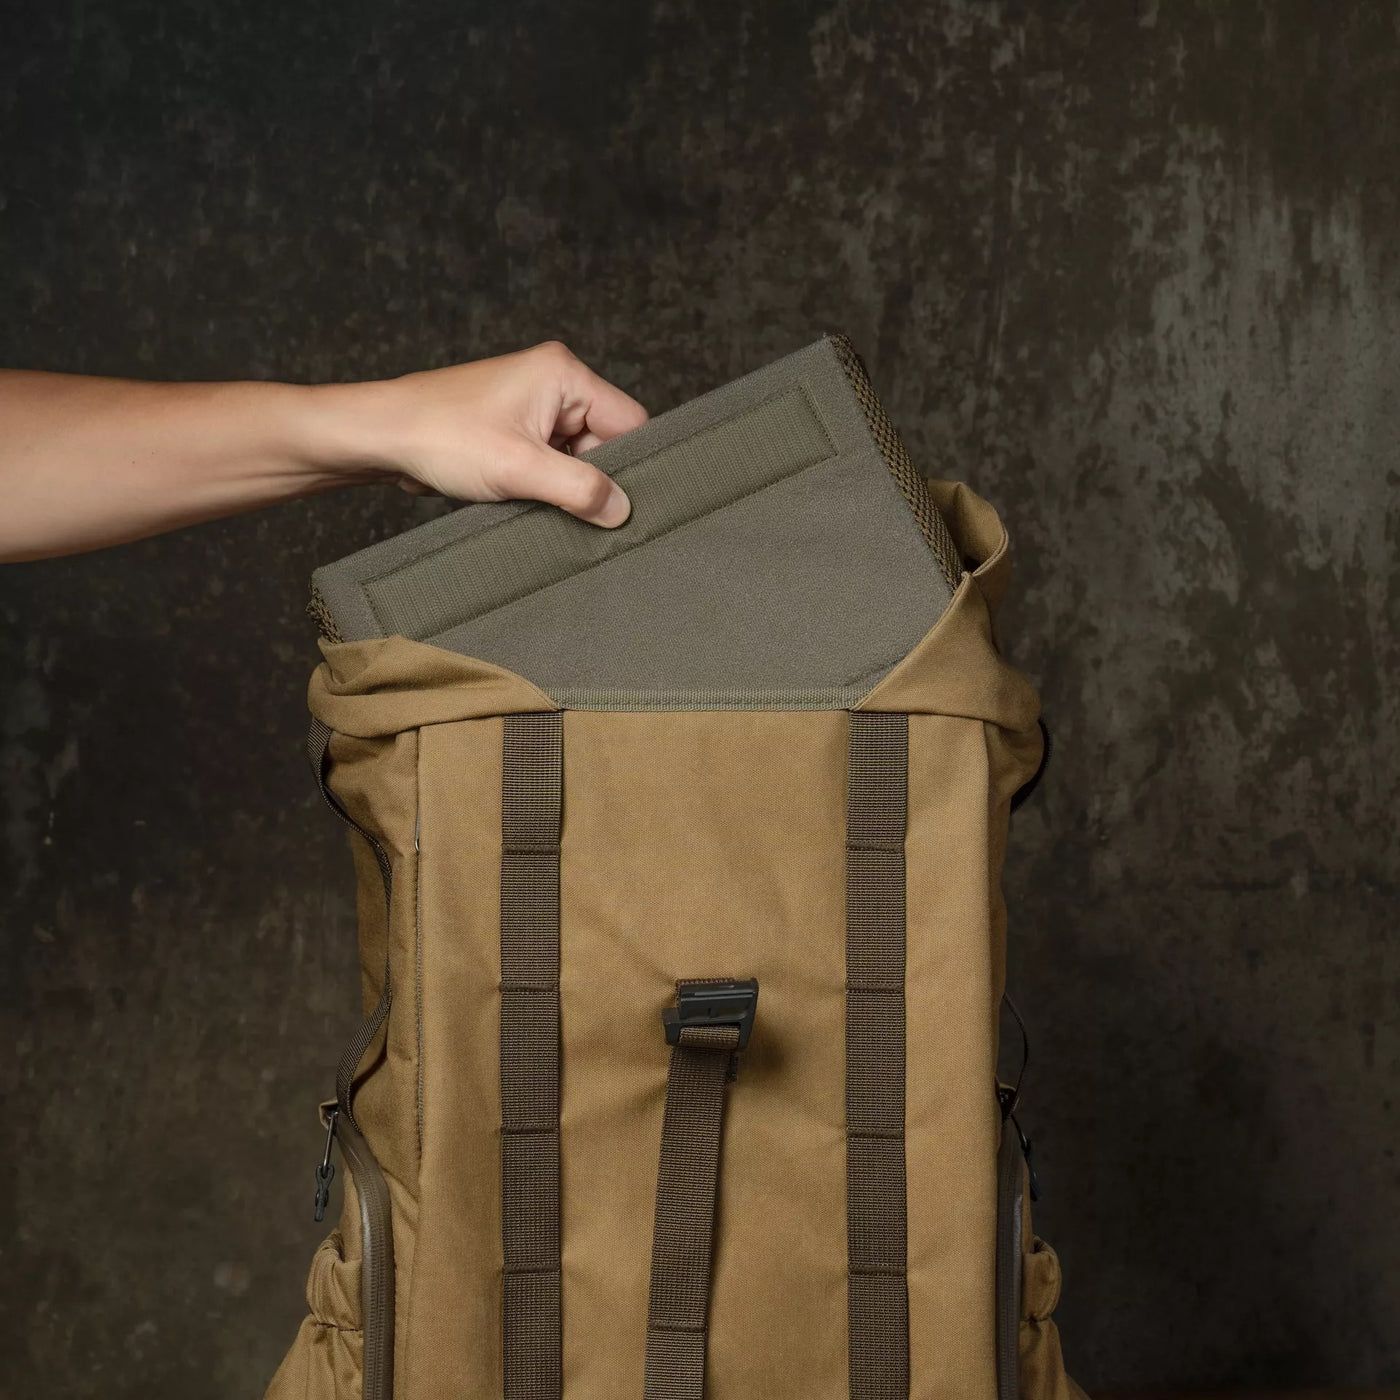 Wotancraft New Pilot backpack review: A high-quality, modular bag